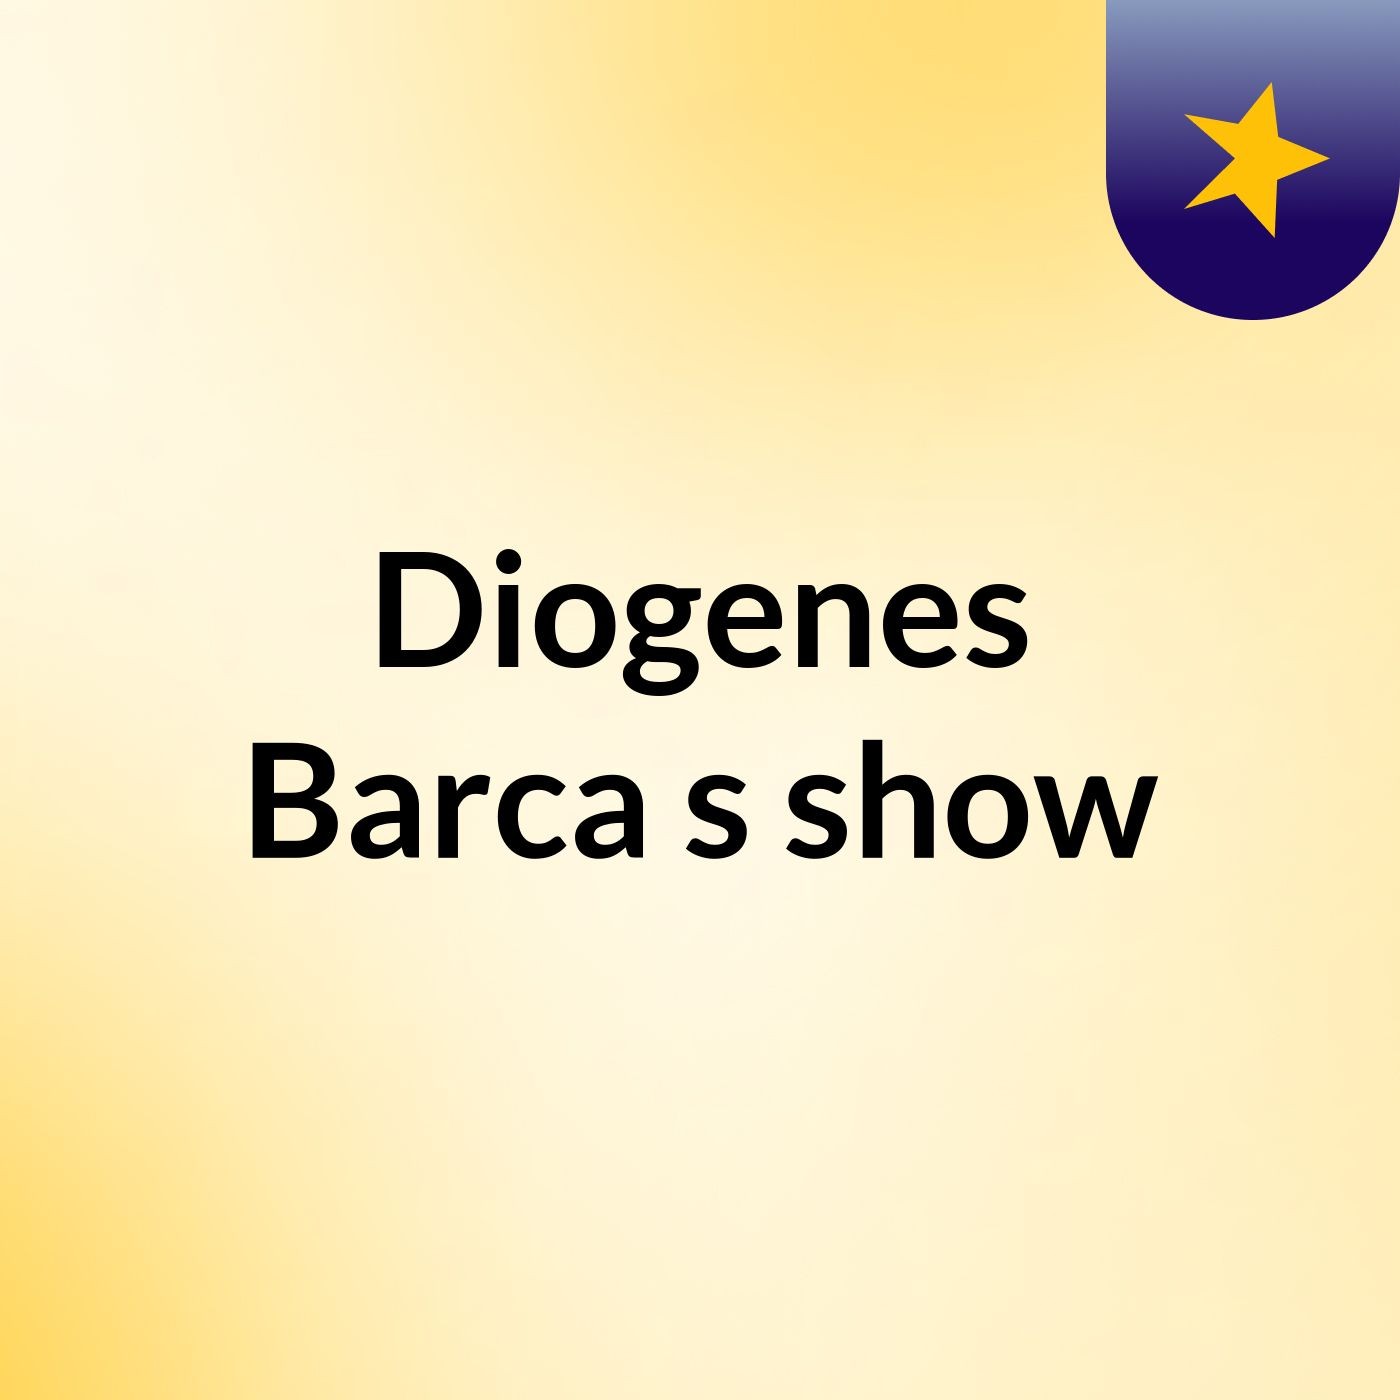 Diogenes Barca's show